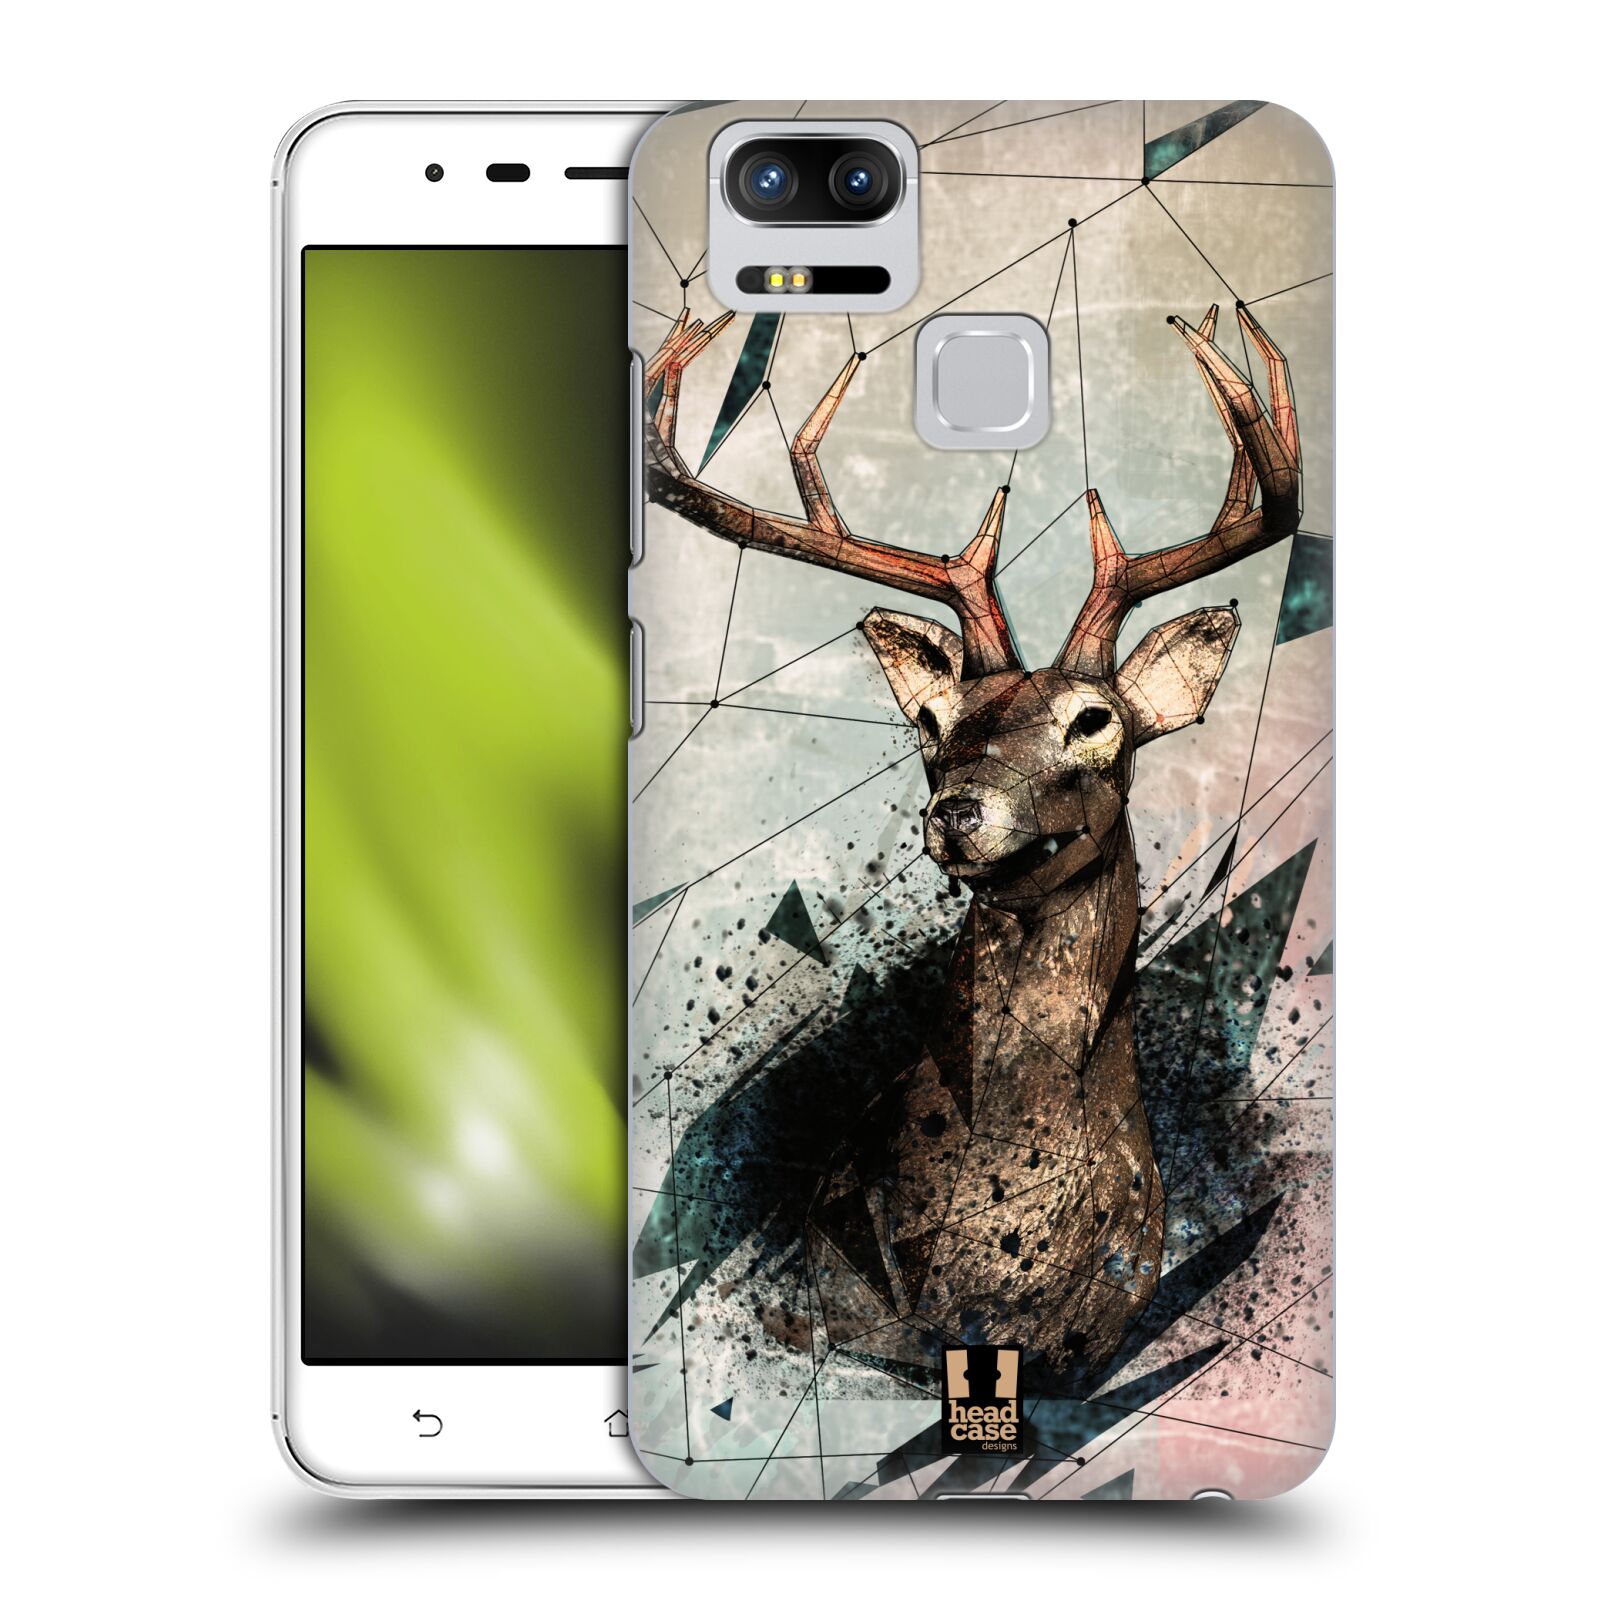 HEAD CASE plastový obal na mobil Asus Zenfone 3 Zoom ZE553KL vzor Skica zvíře kreslené jelen